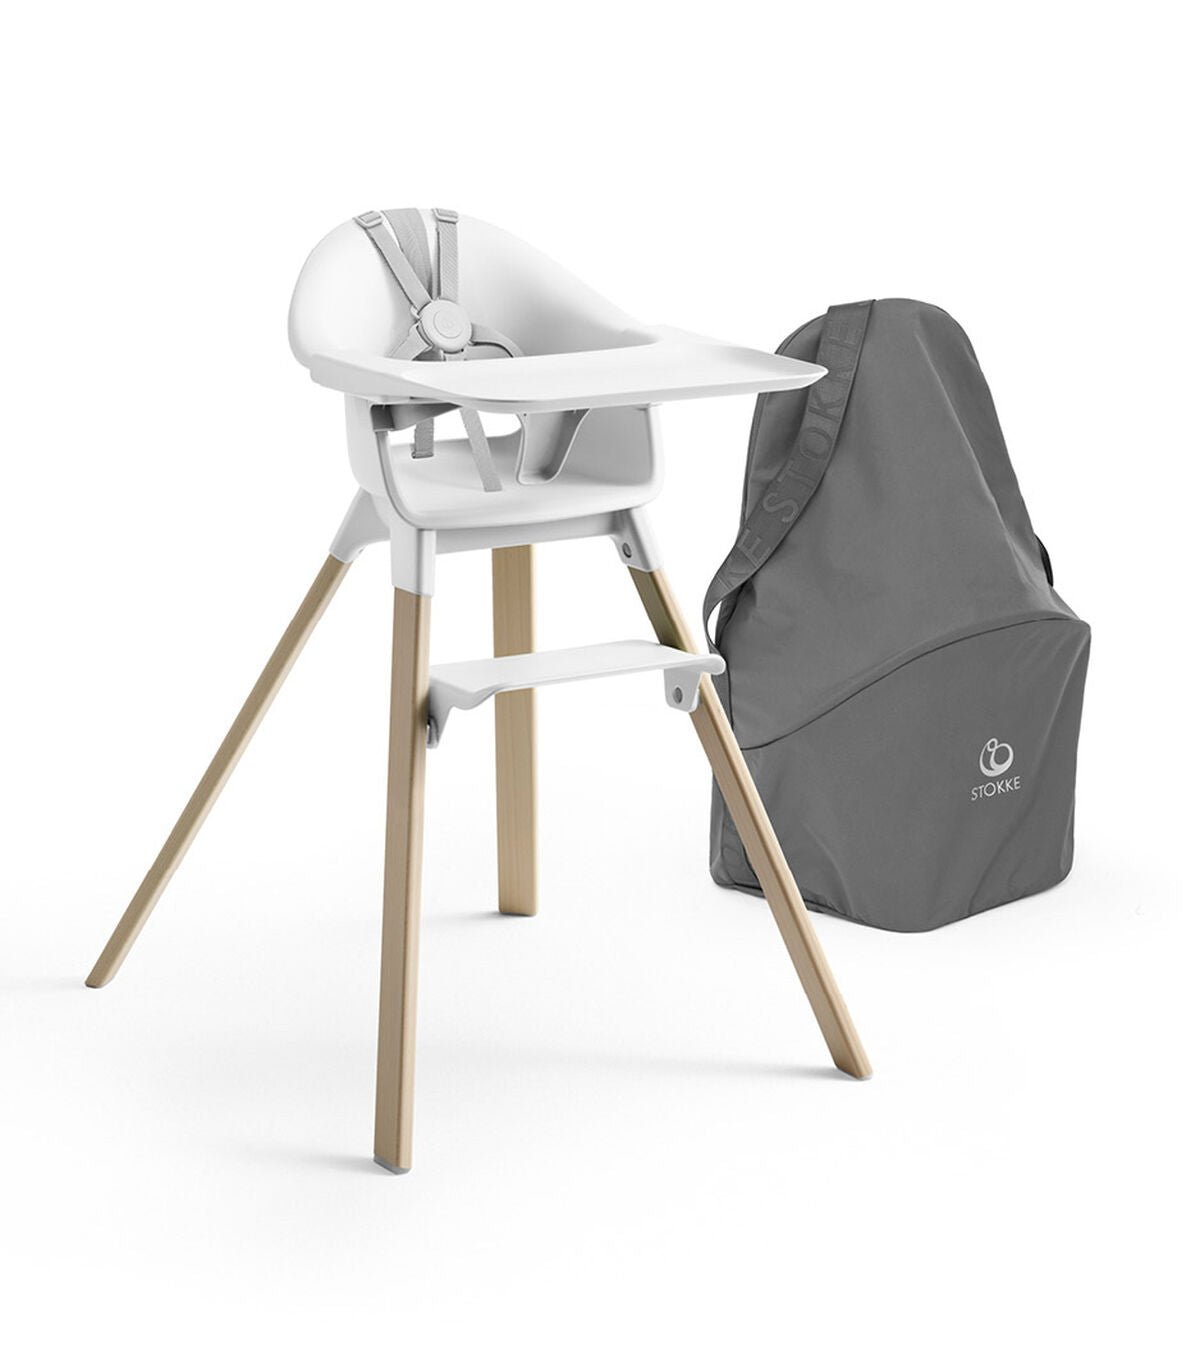 Stokke Clikk High Chair with Travel Bag, White - ANB Baby -$100 - $300